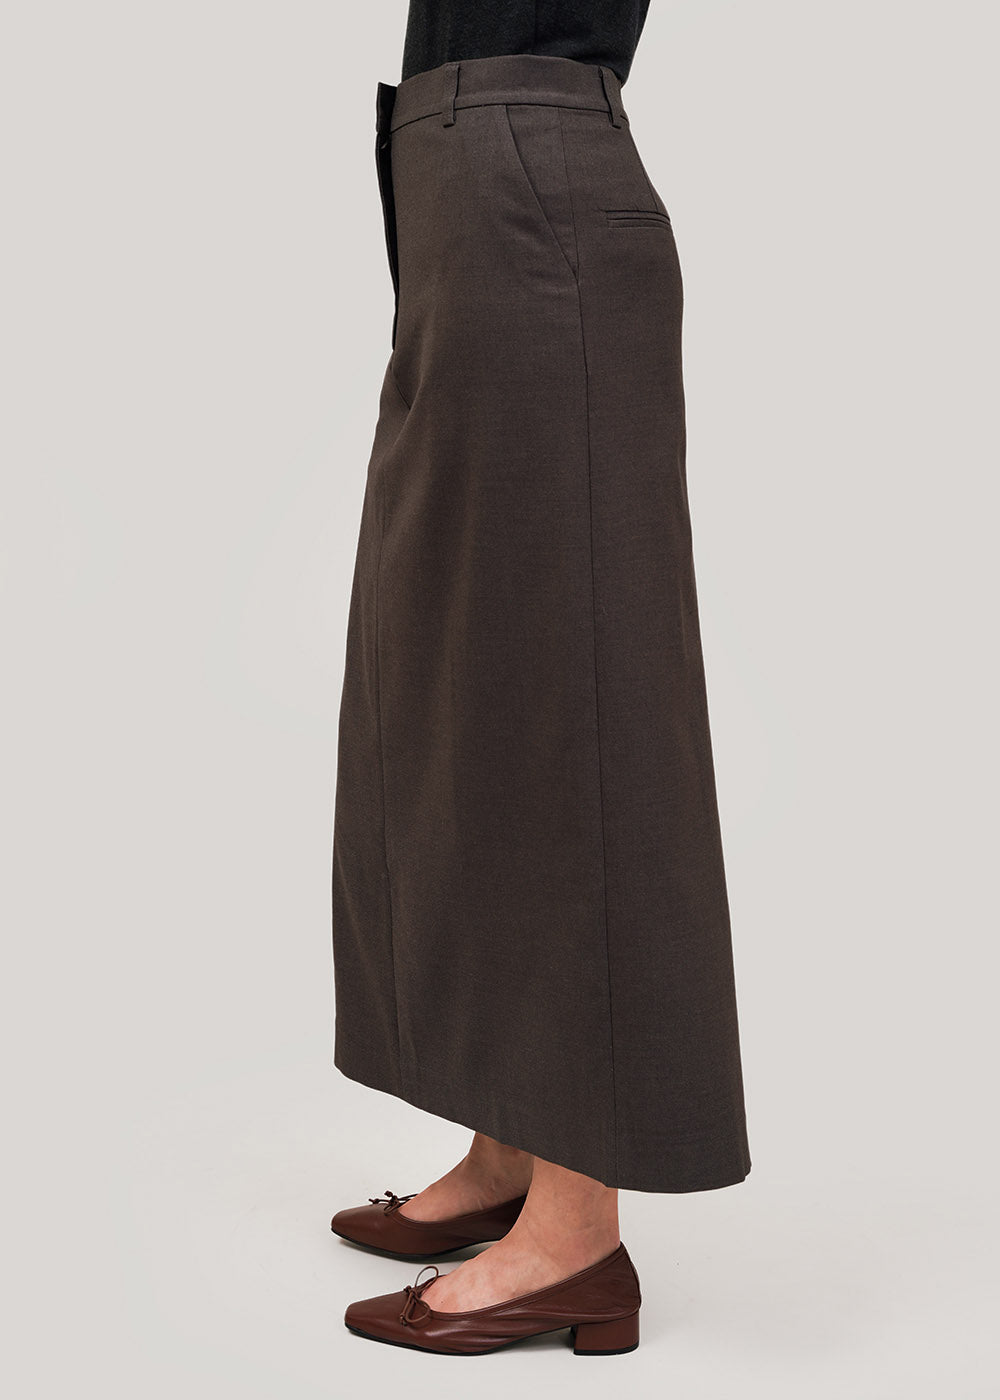 Wool Skirt, Brown Winter Wool Skirt, Midi Wool Skirt, Black Skirt